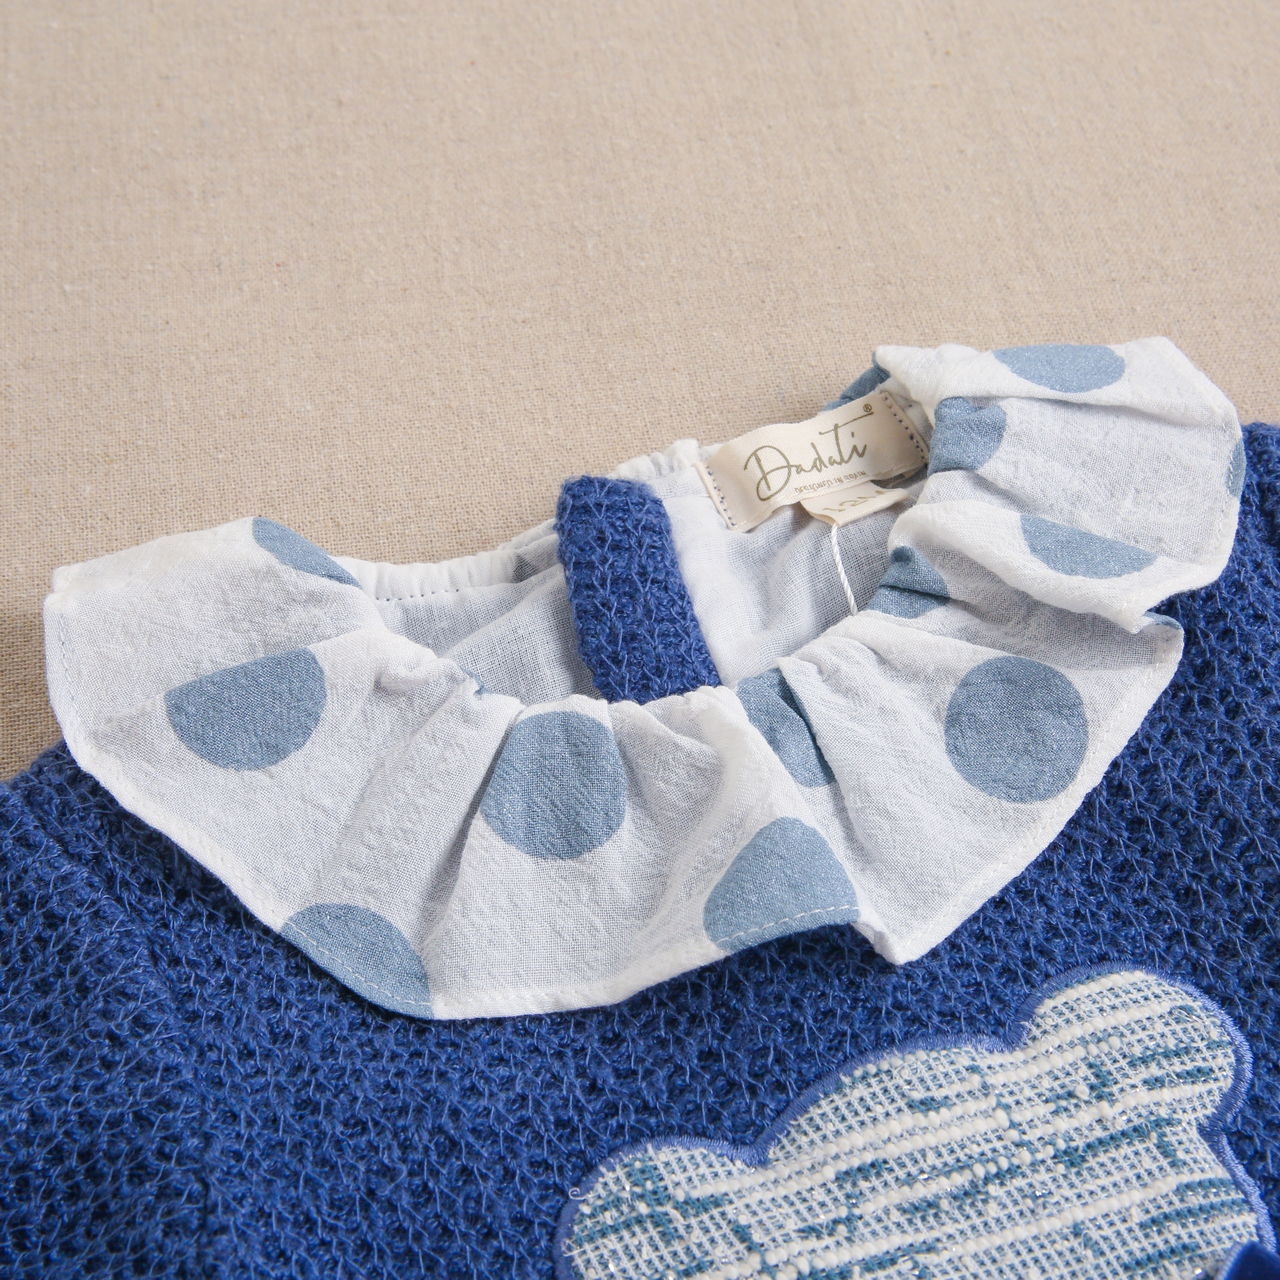 Imagen de Vestido de bebé niña tejido punto azul con bordado de oso